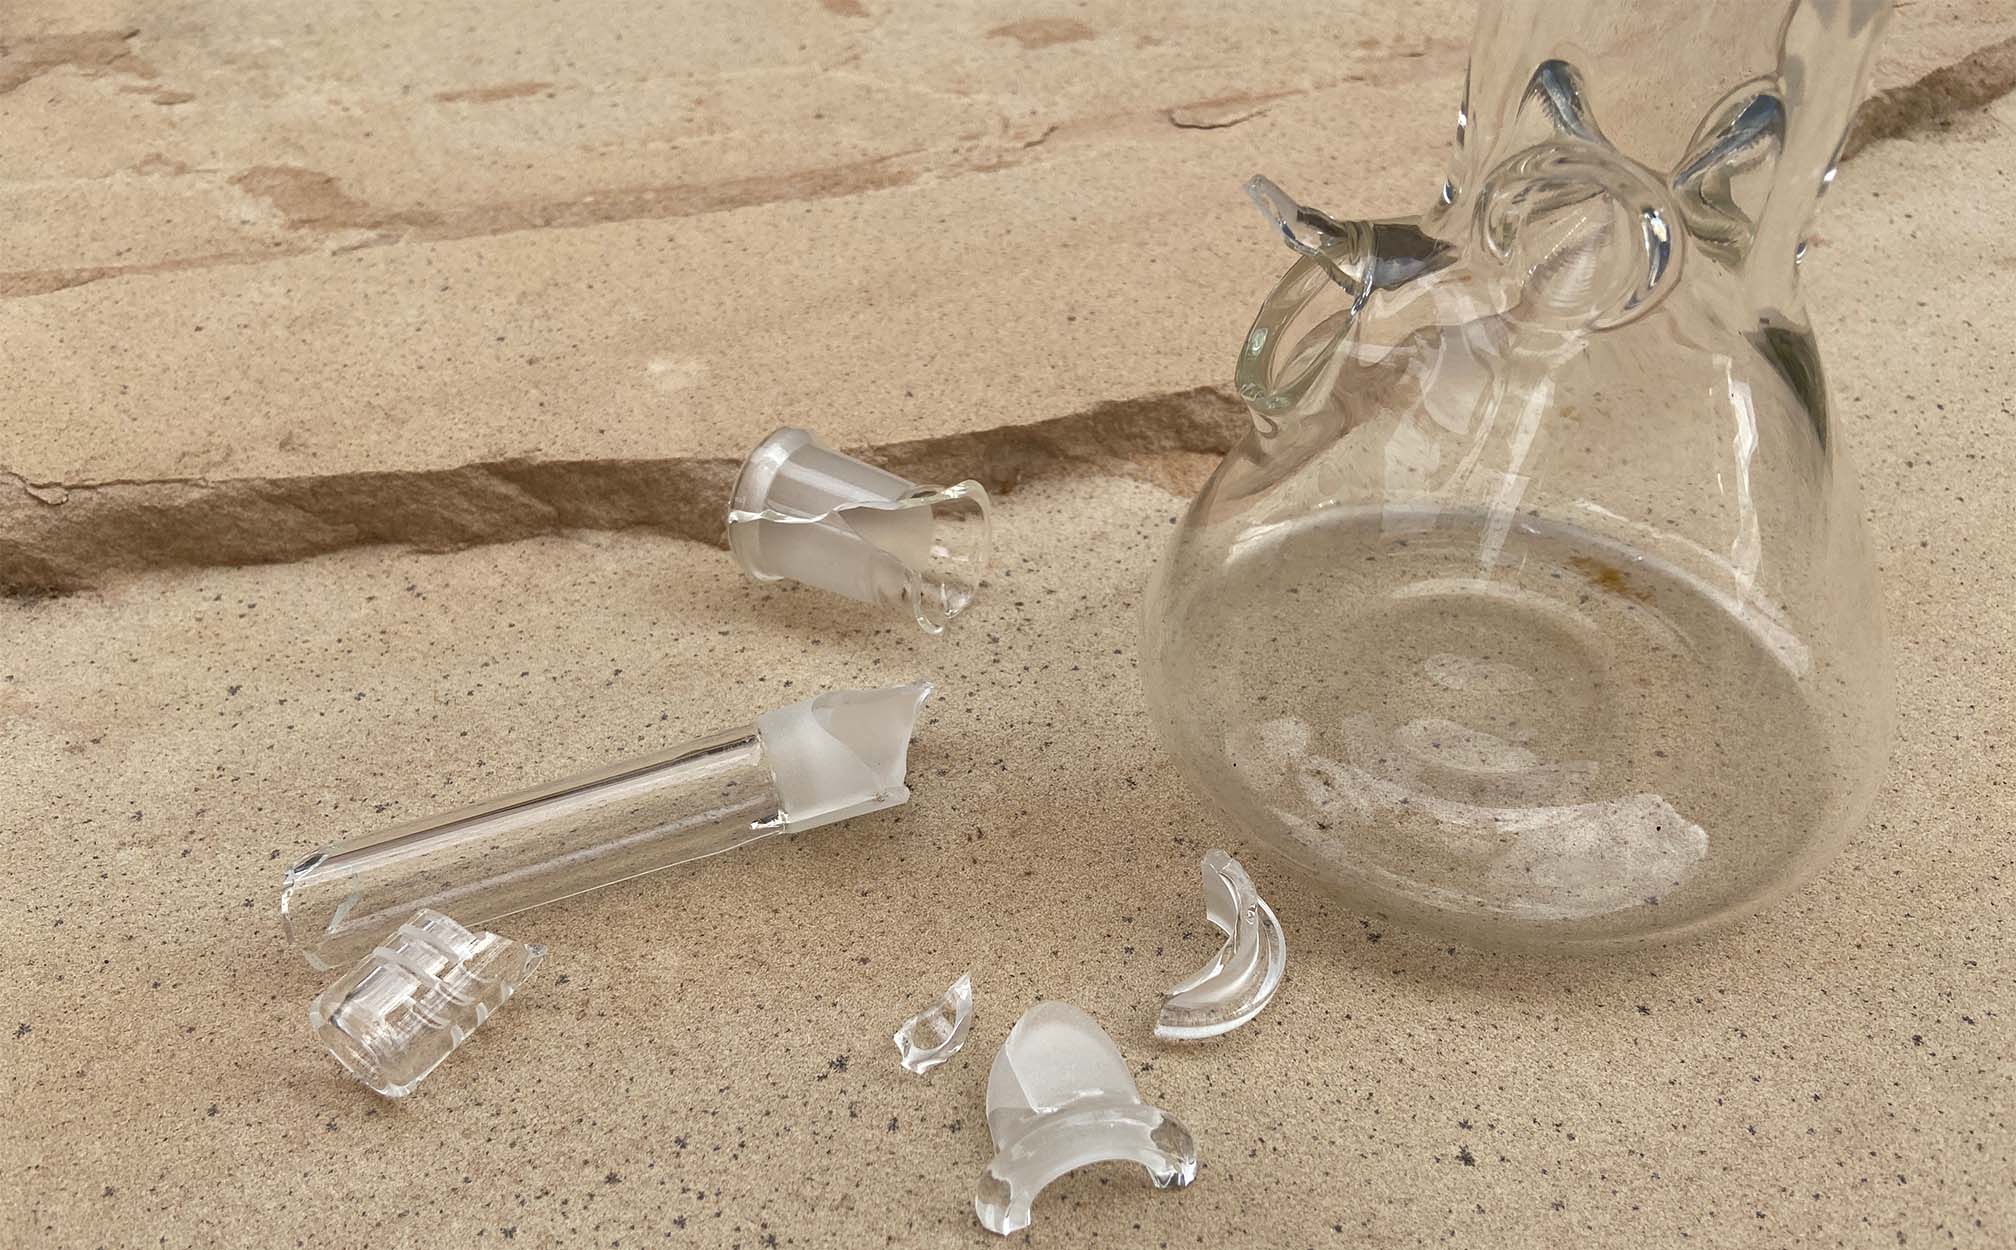 How to Clean Up Broken Glass in Quick & Easy Ways